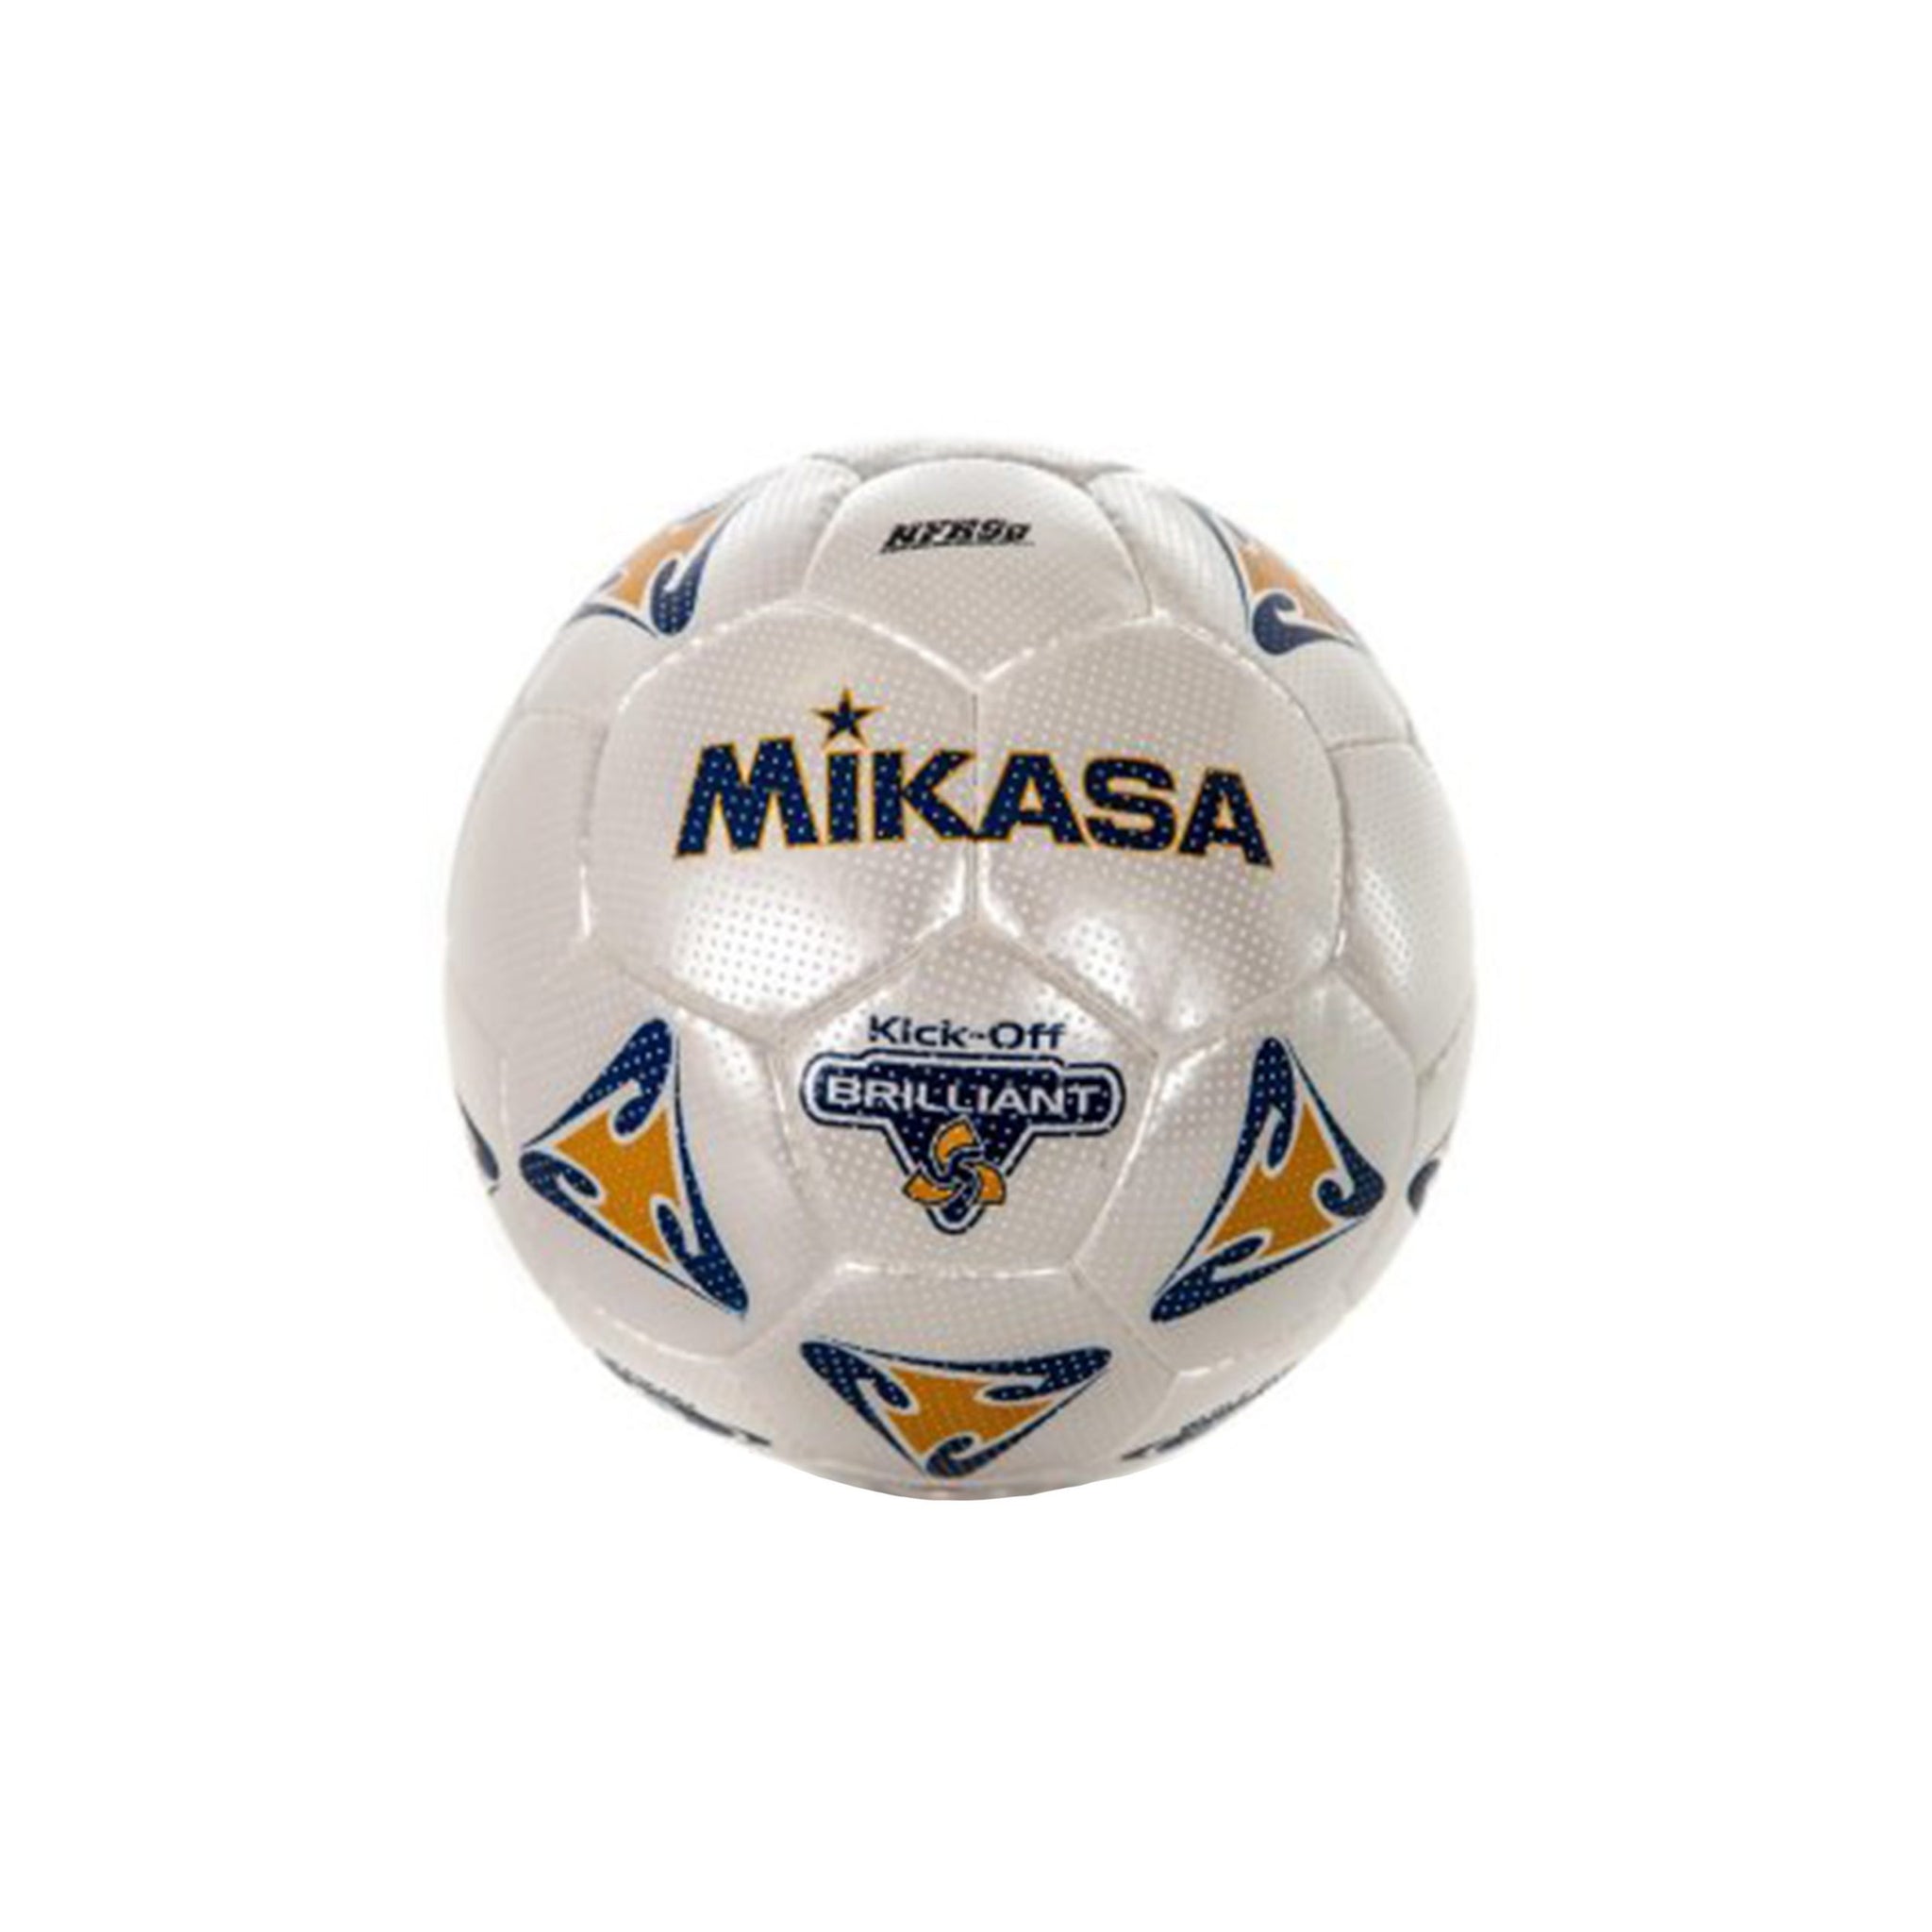 MIKASA Kick Off Brilliant Ball